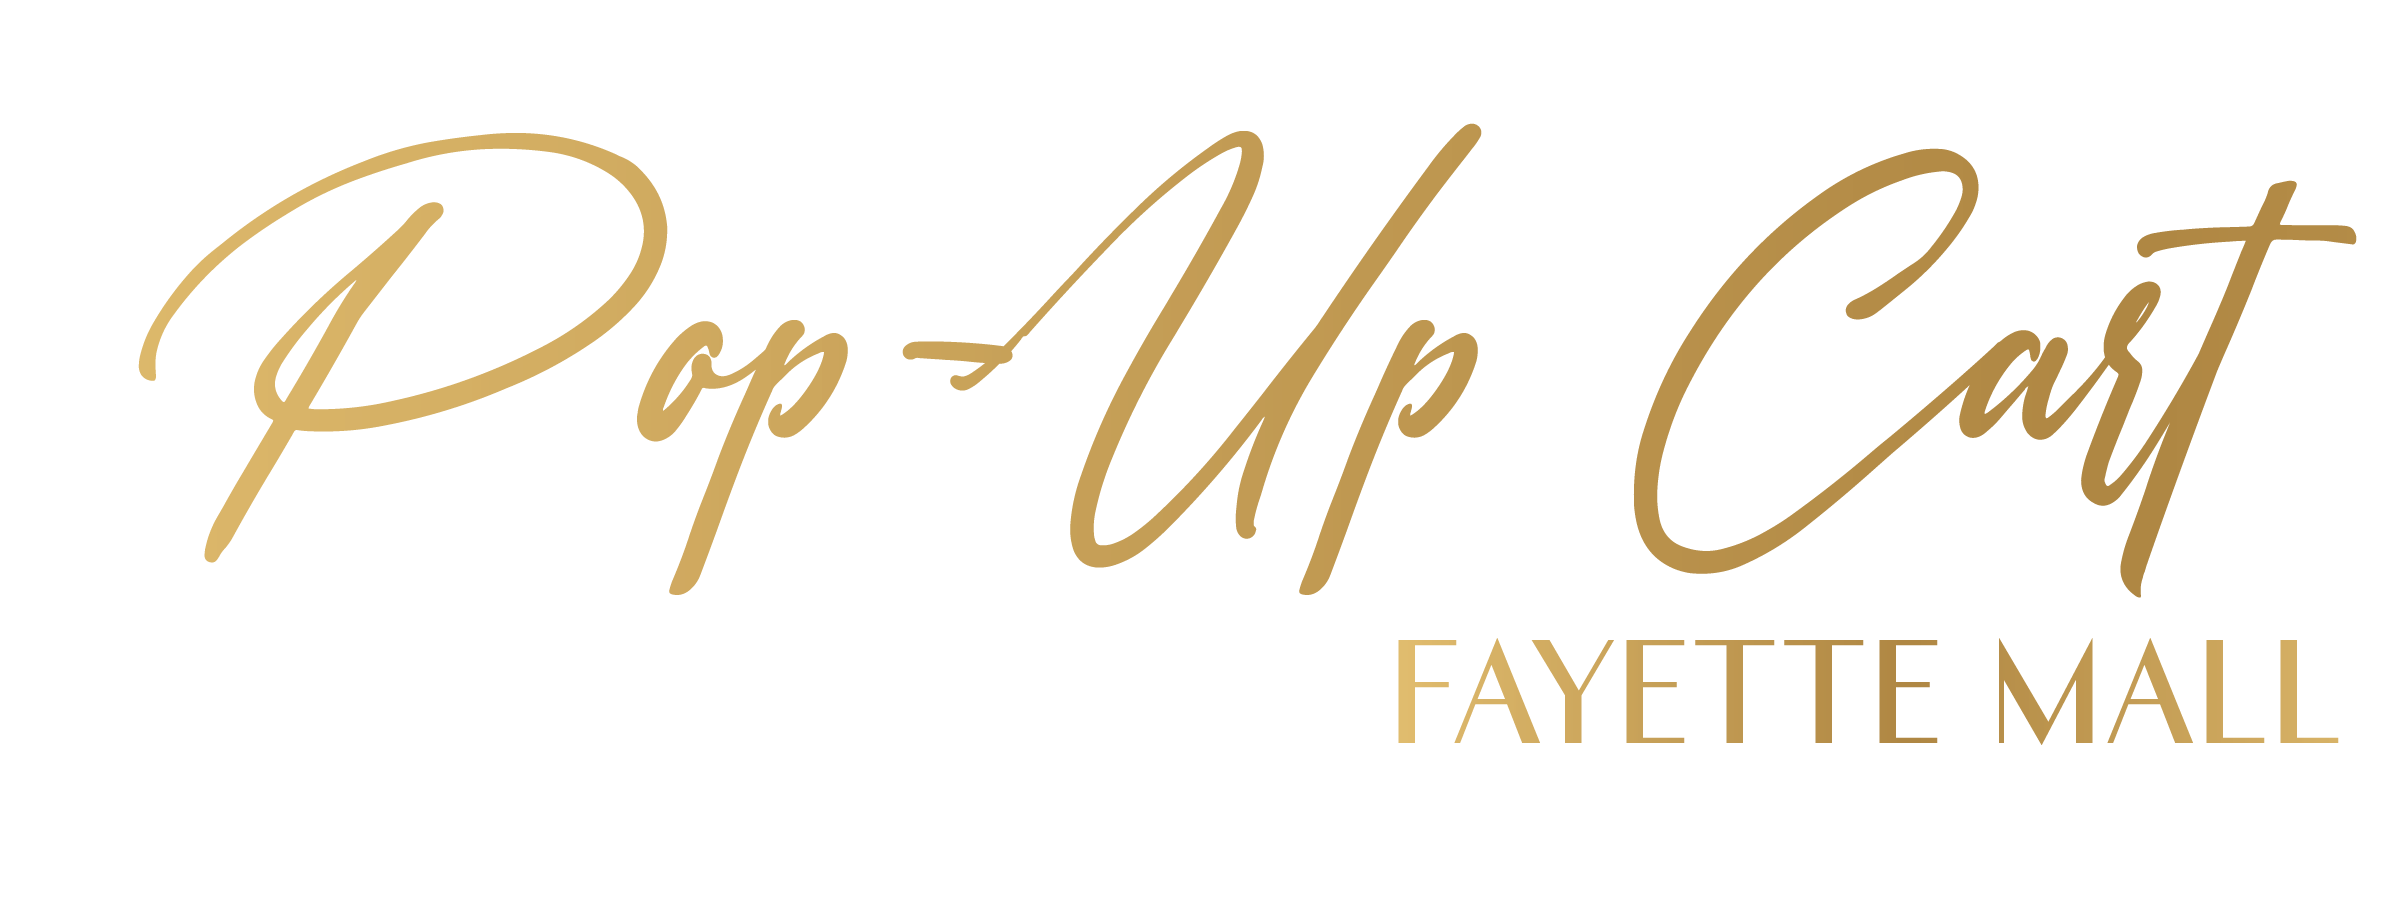 Pop-up Shop Fayette Mall logo